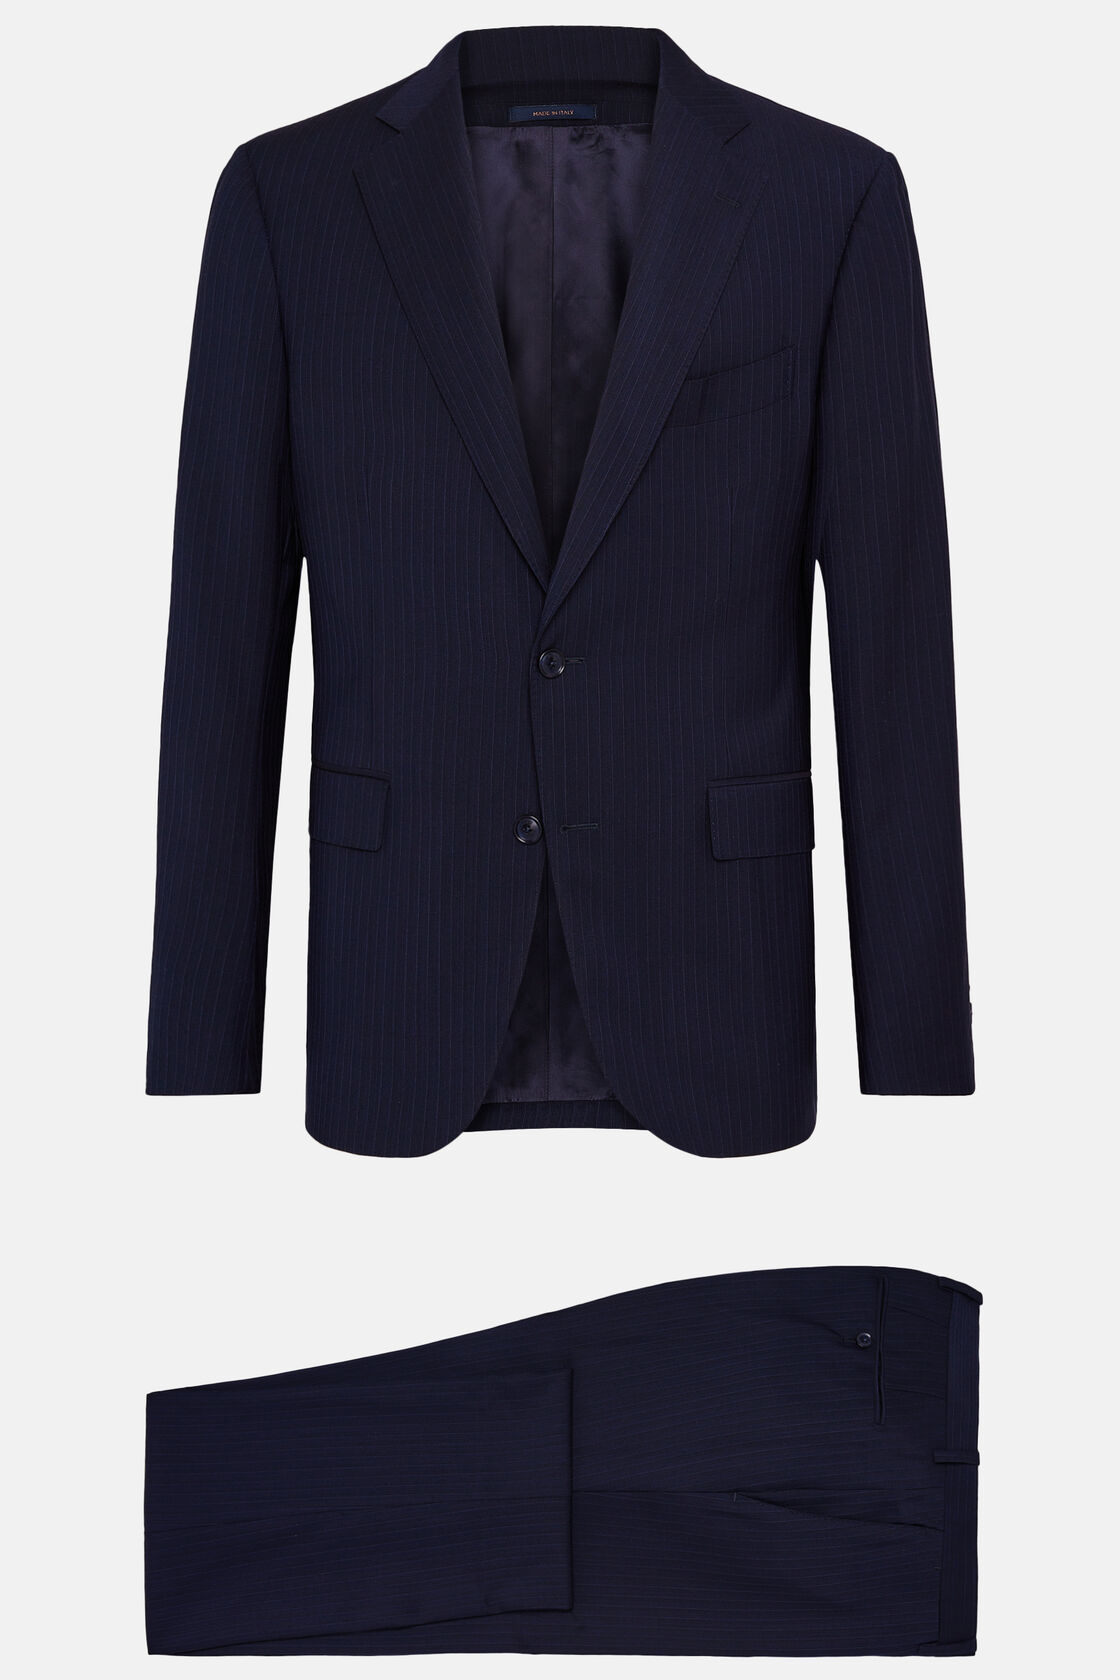 Navy Blue Pinstripe Suit In Pure Wool, Navy blue, hi-res